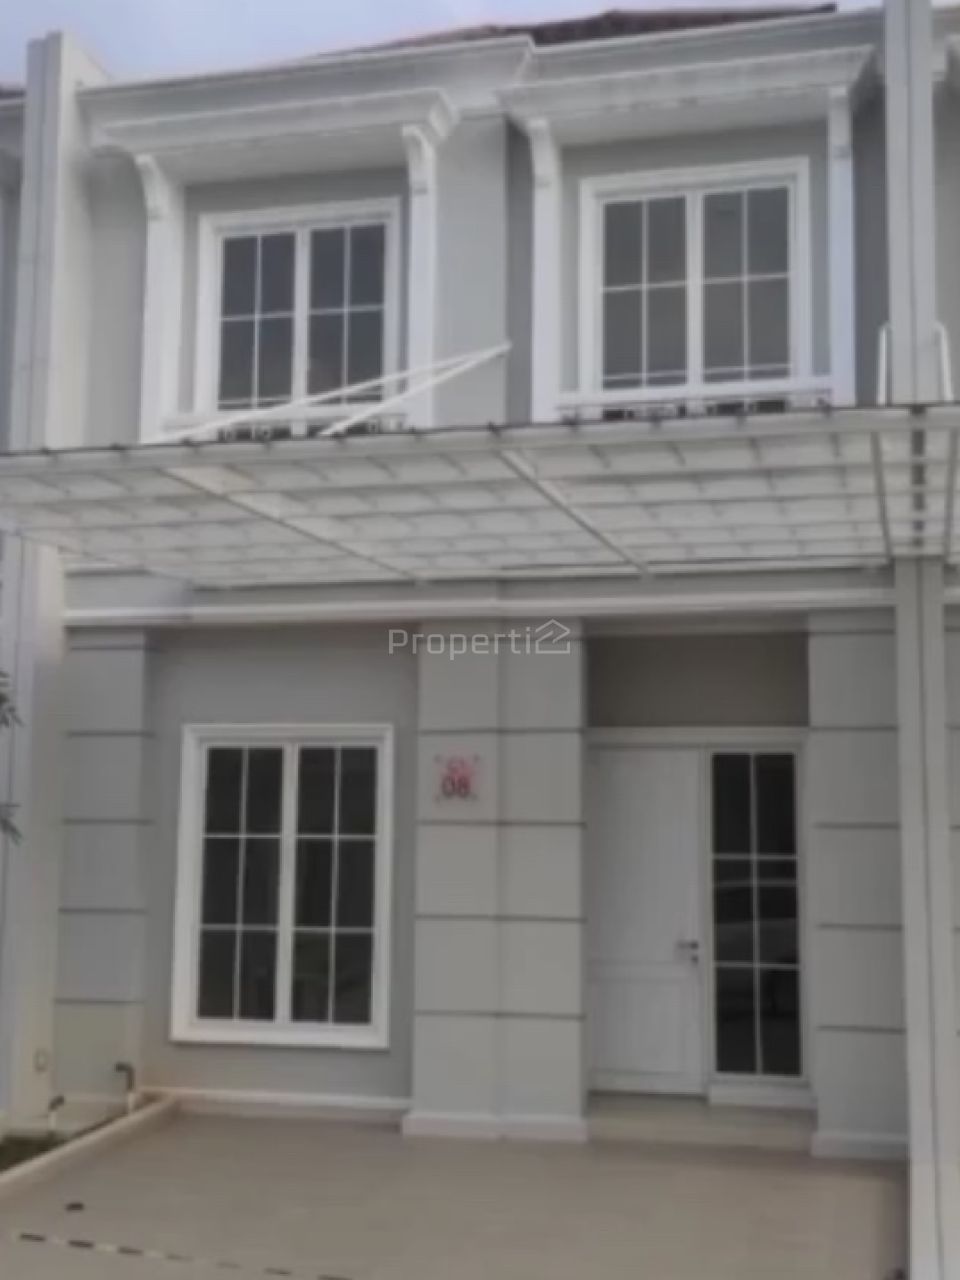 New House in Parung Panjang Legok, North Serpong, Banten